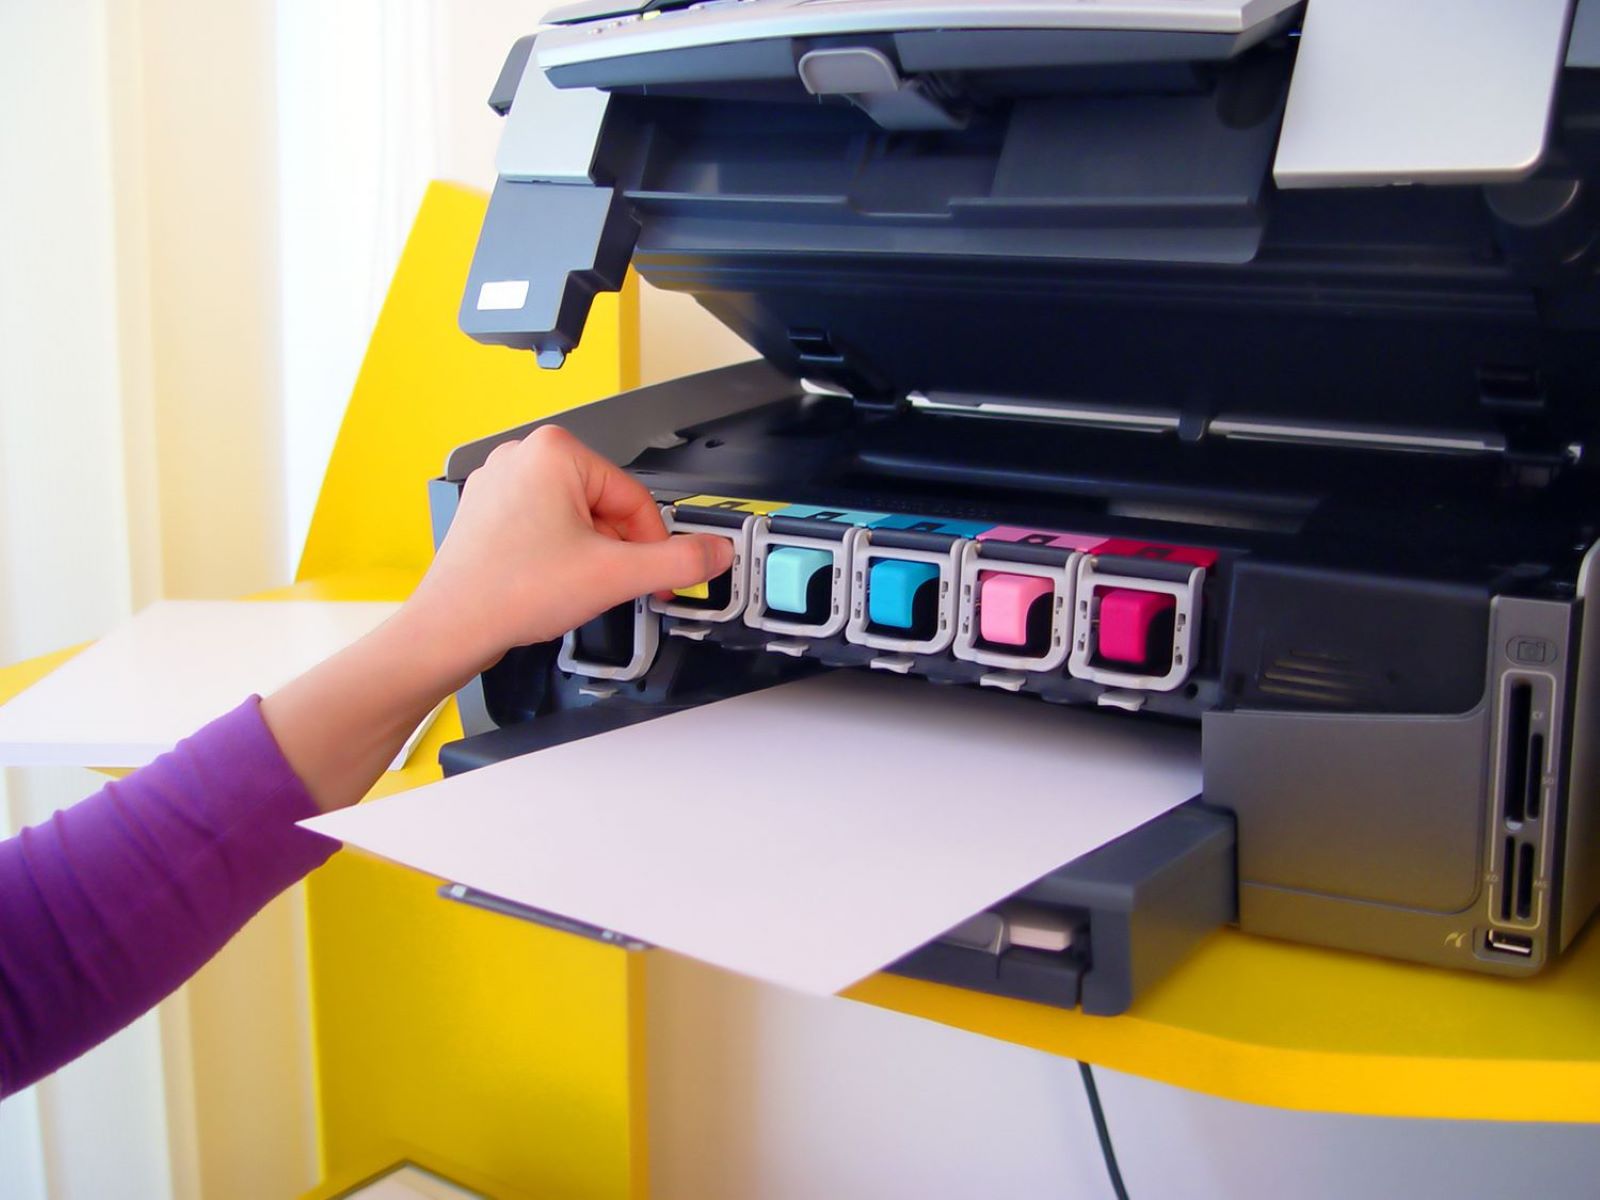 Why Is My Printer Printing Pink Instead Of Blue